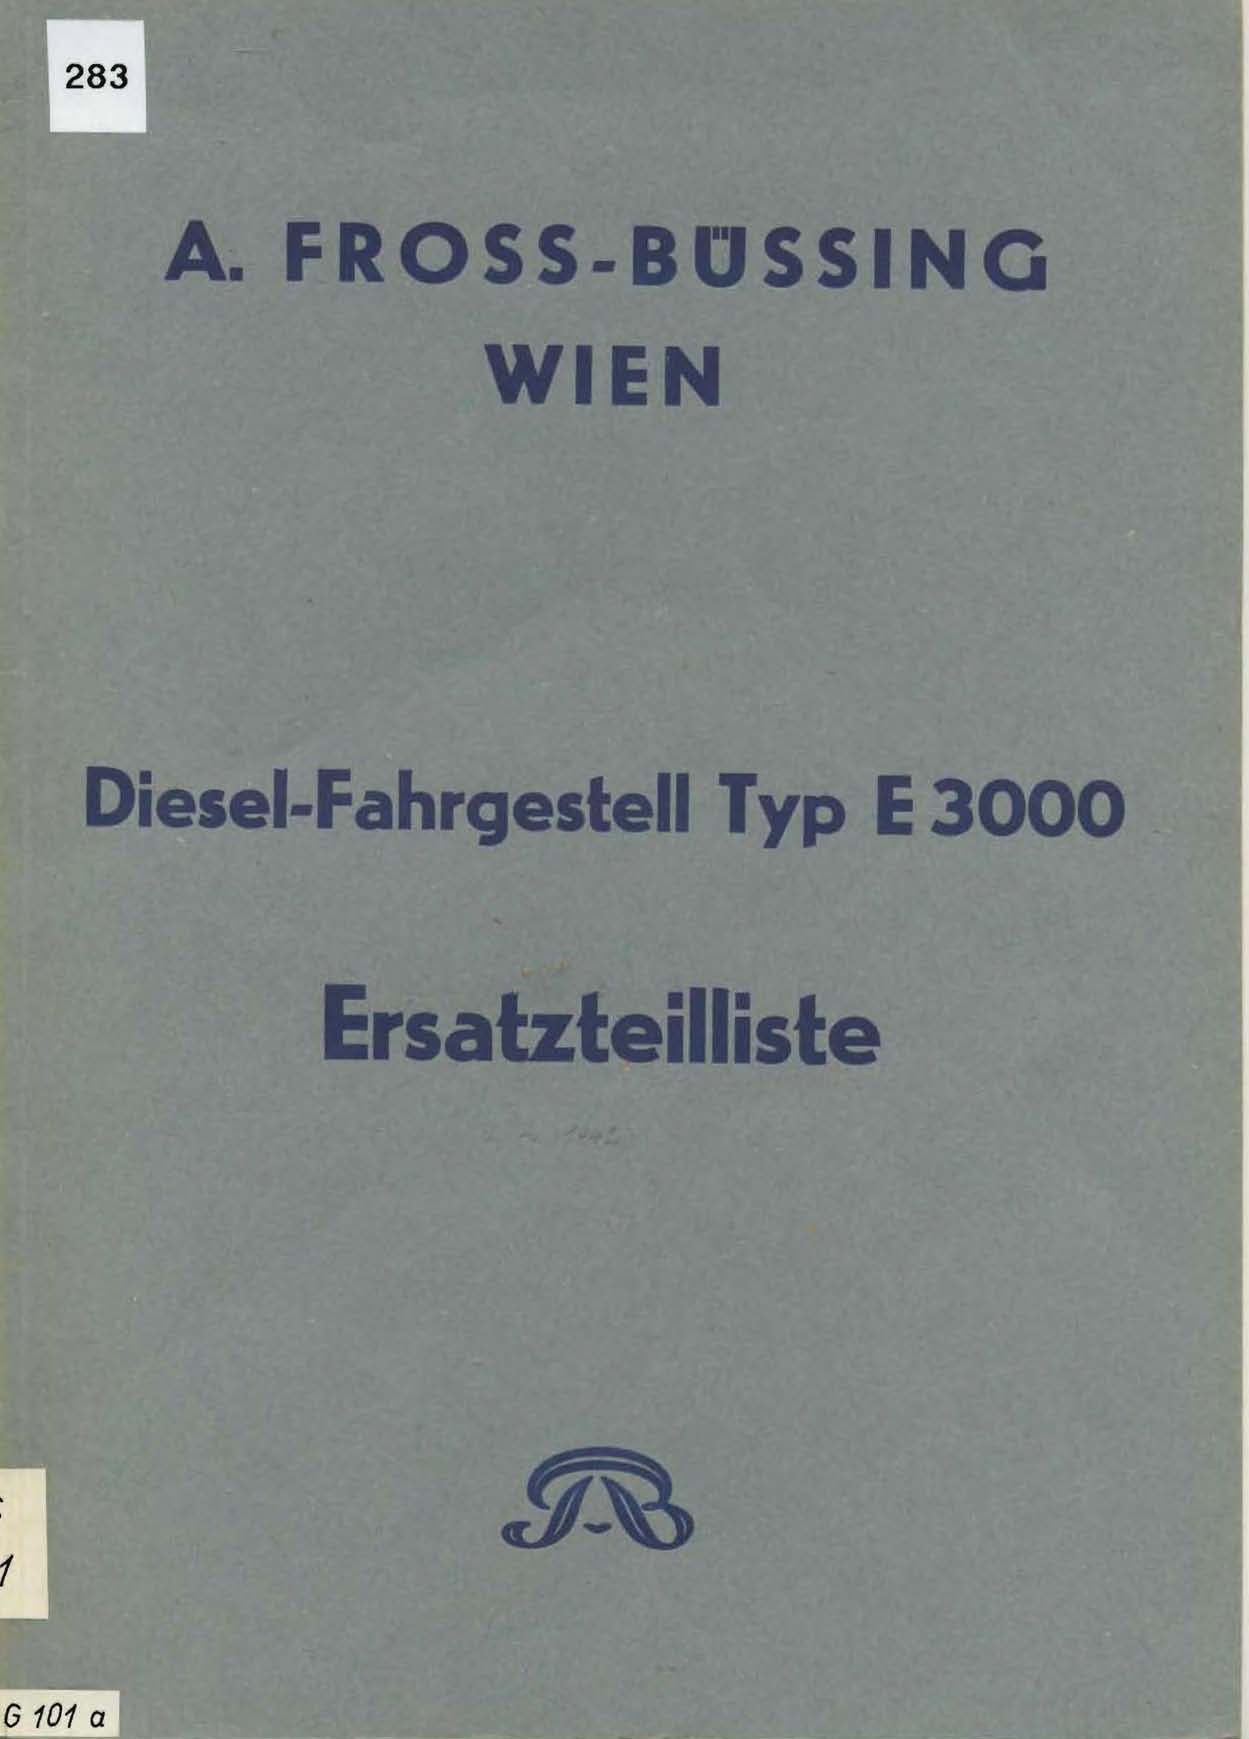 Ersatzteilliste, Diesel-Fahrgestell Typ E3000